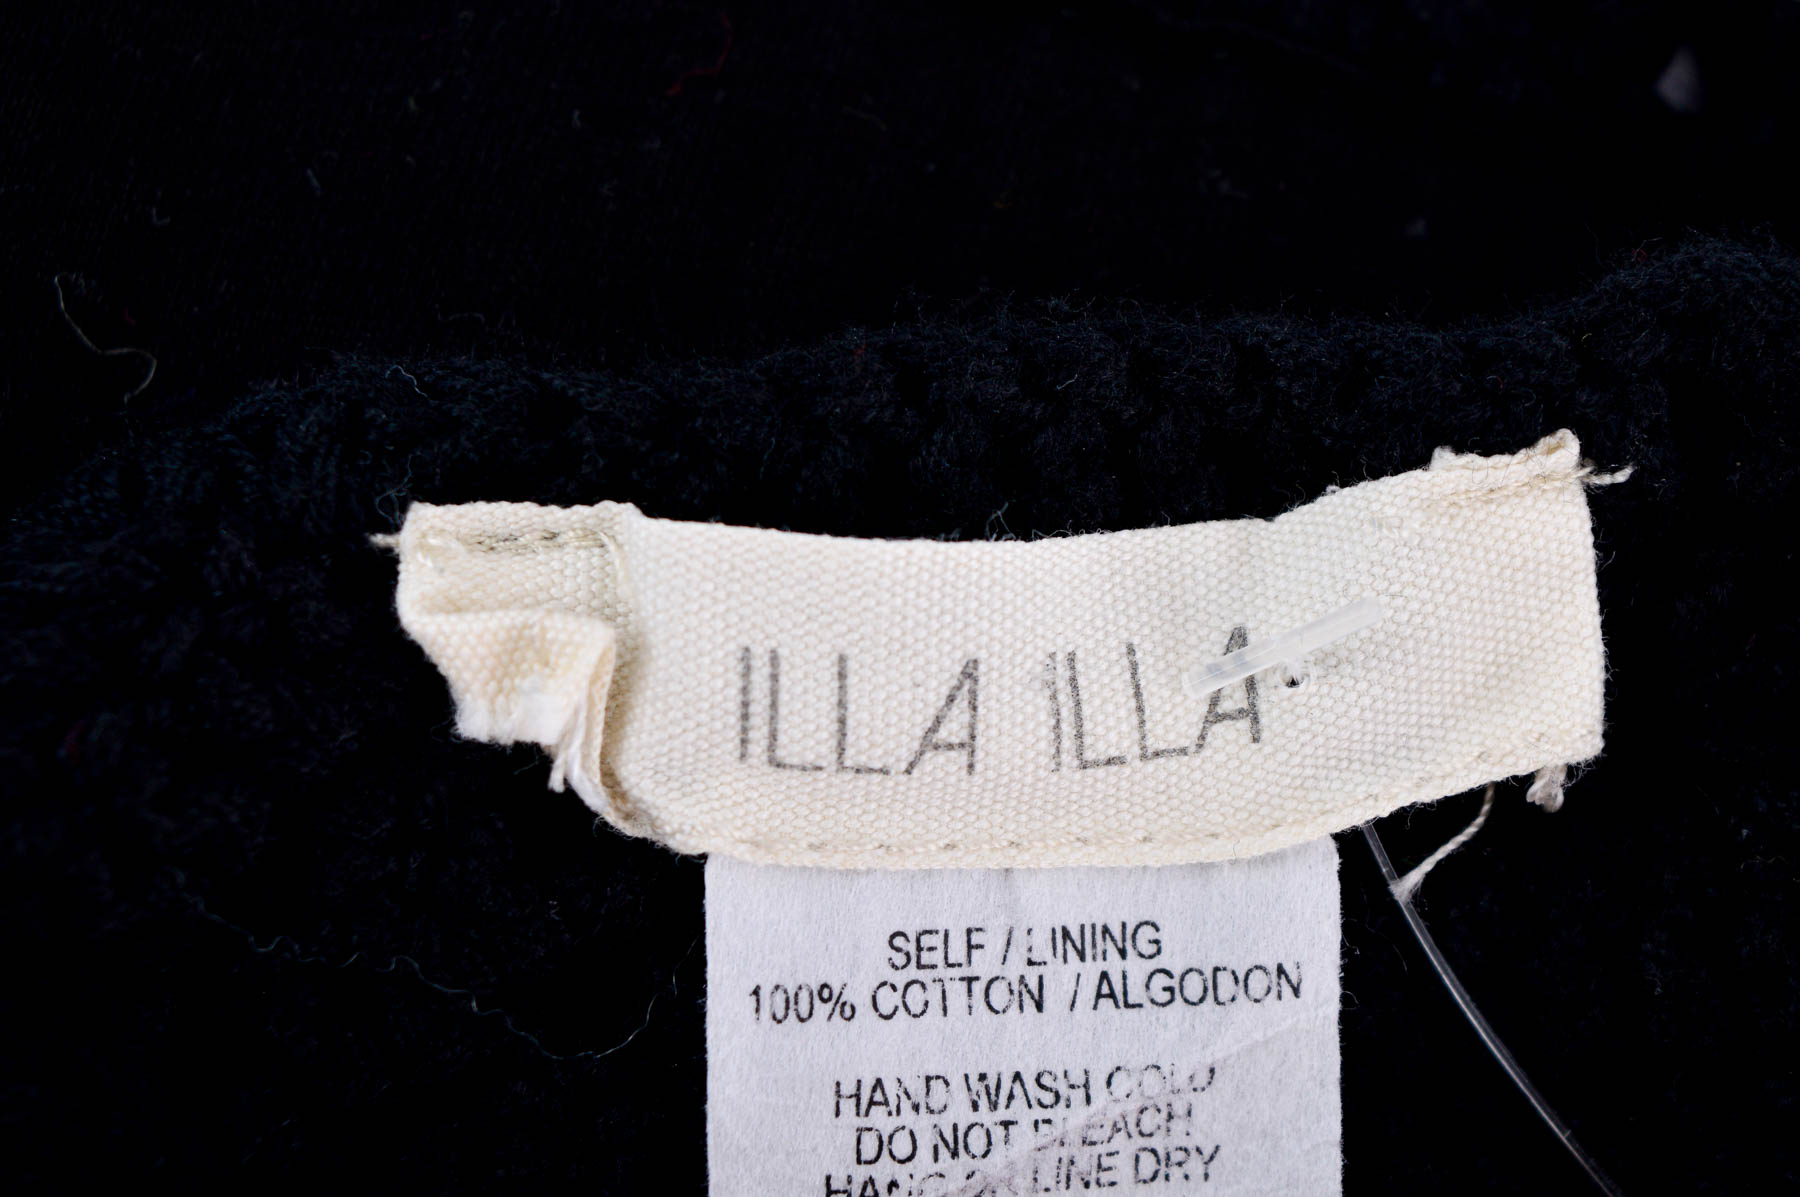 Pulover de damă - ILLA ILLA - 2